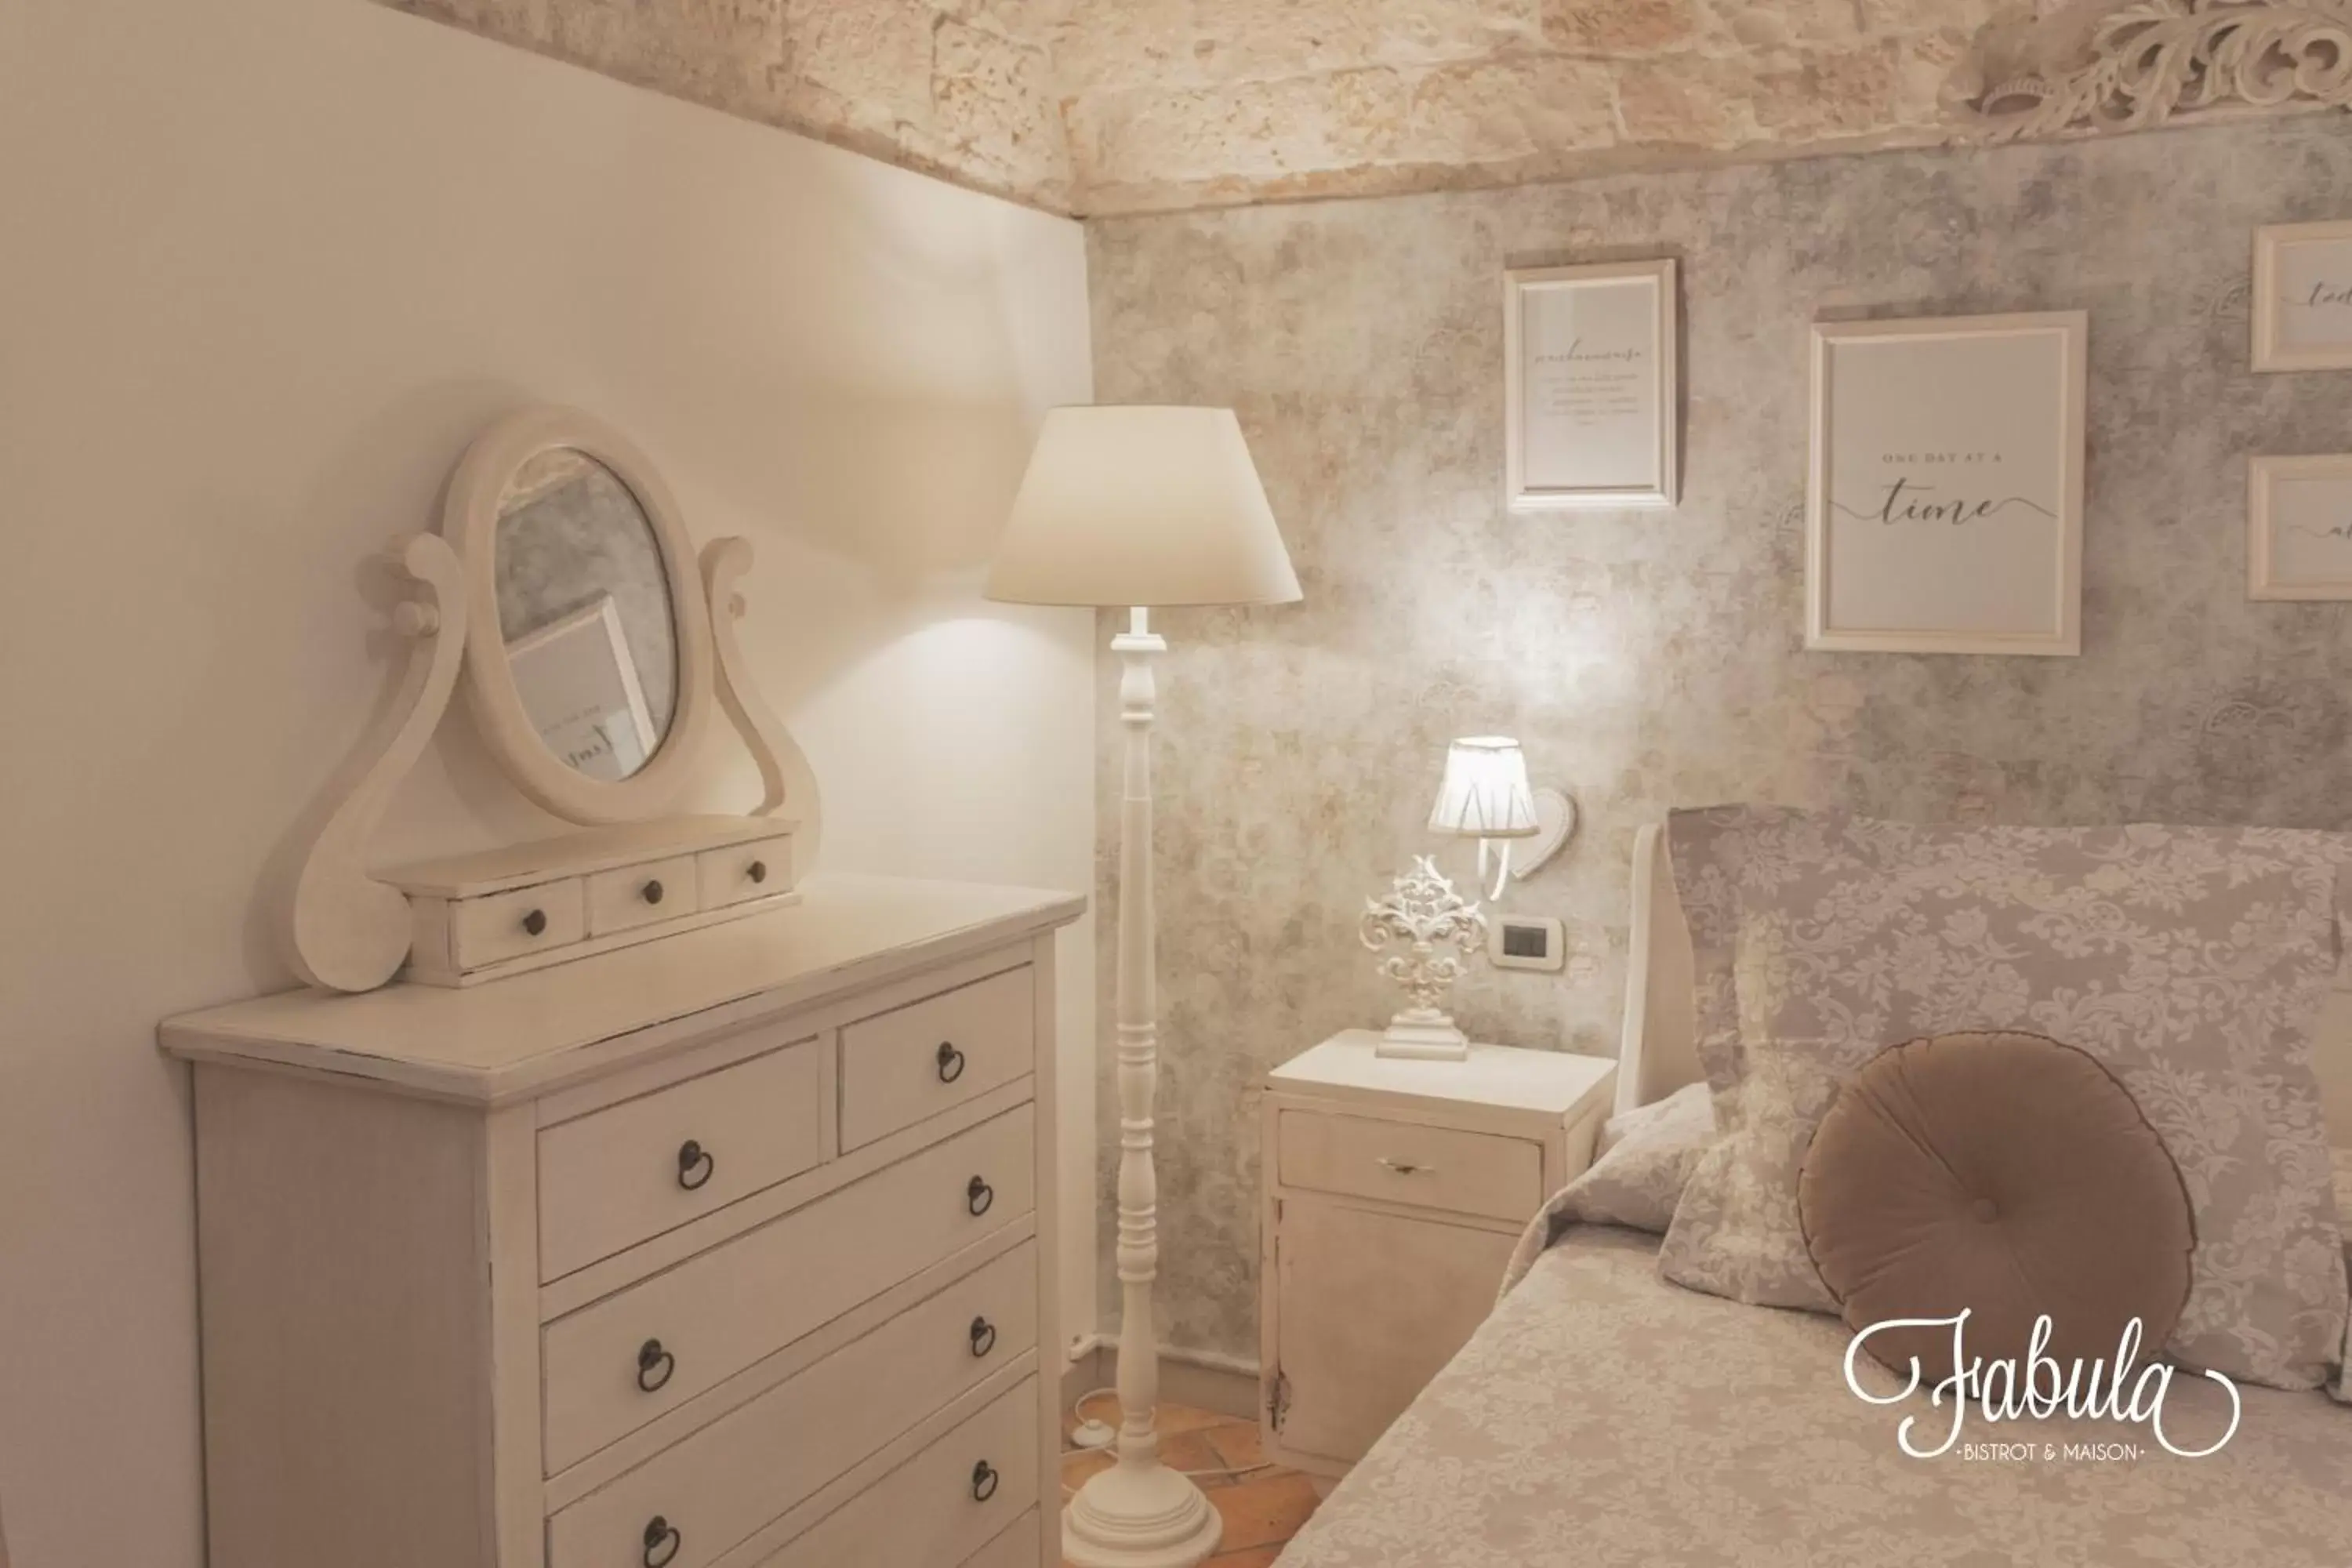 Photo of the whole room, Bathroom in Masseria Fabula Bistrot & Maison